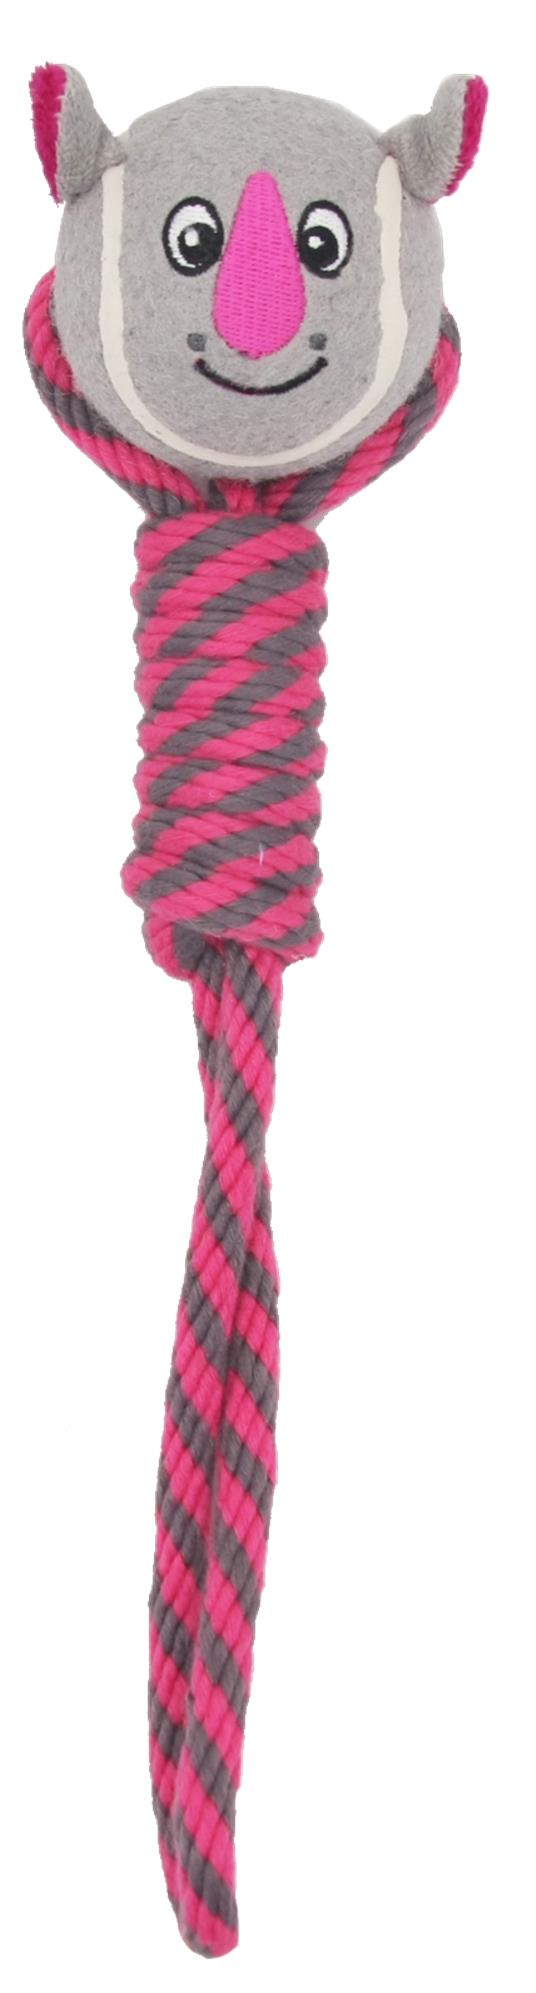 Gimdog igrača za pse Twister, žoga na vrvi, 27x7x7 cm, nosorog